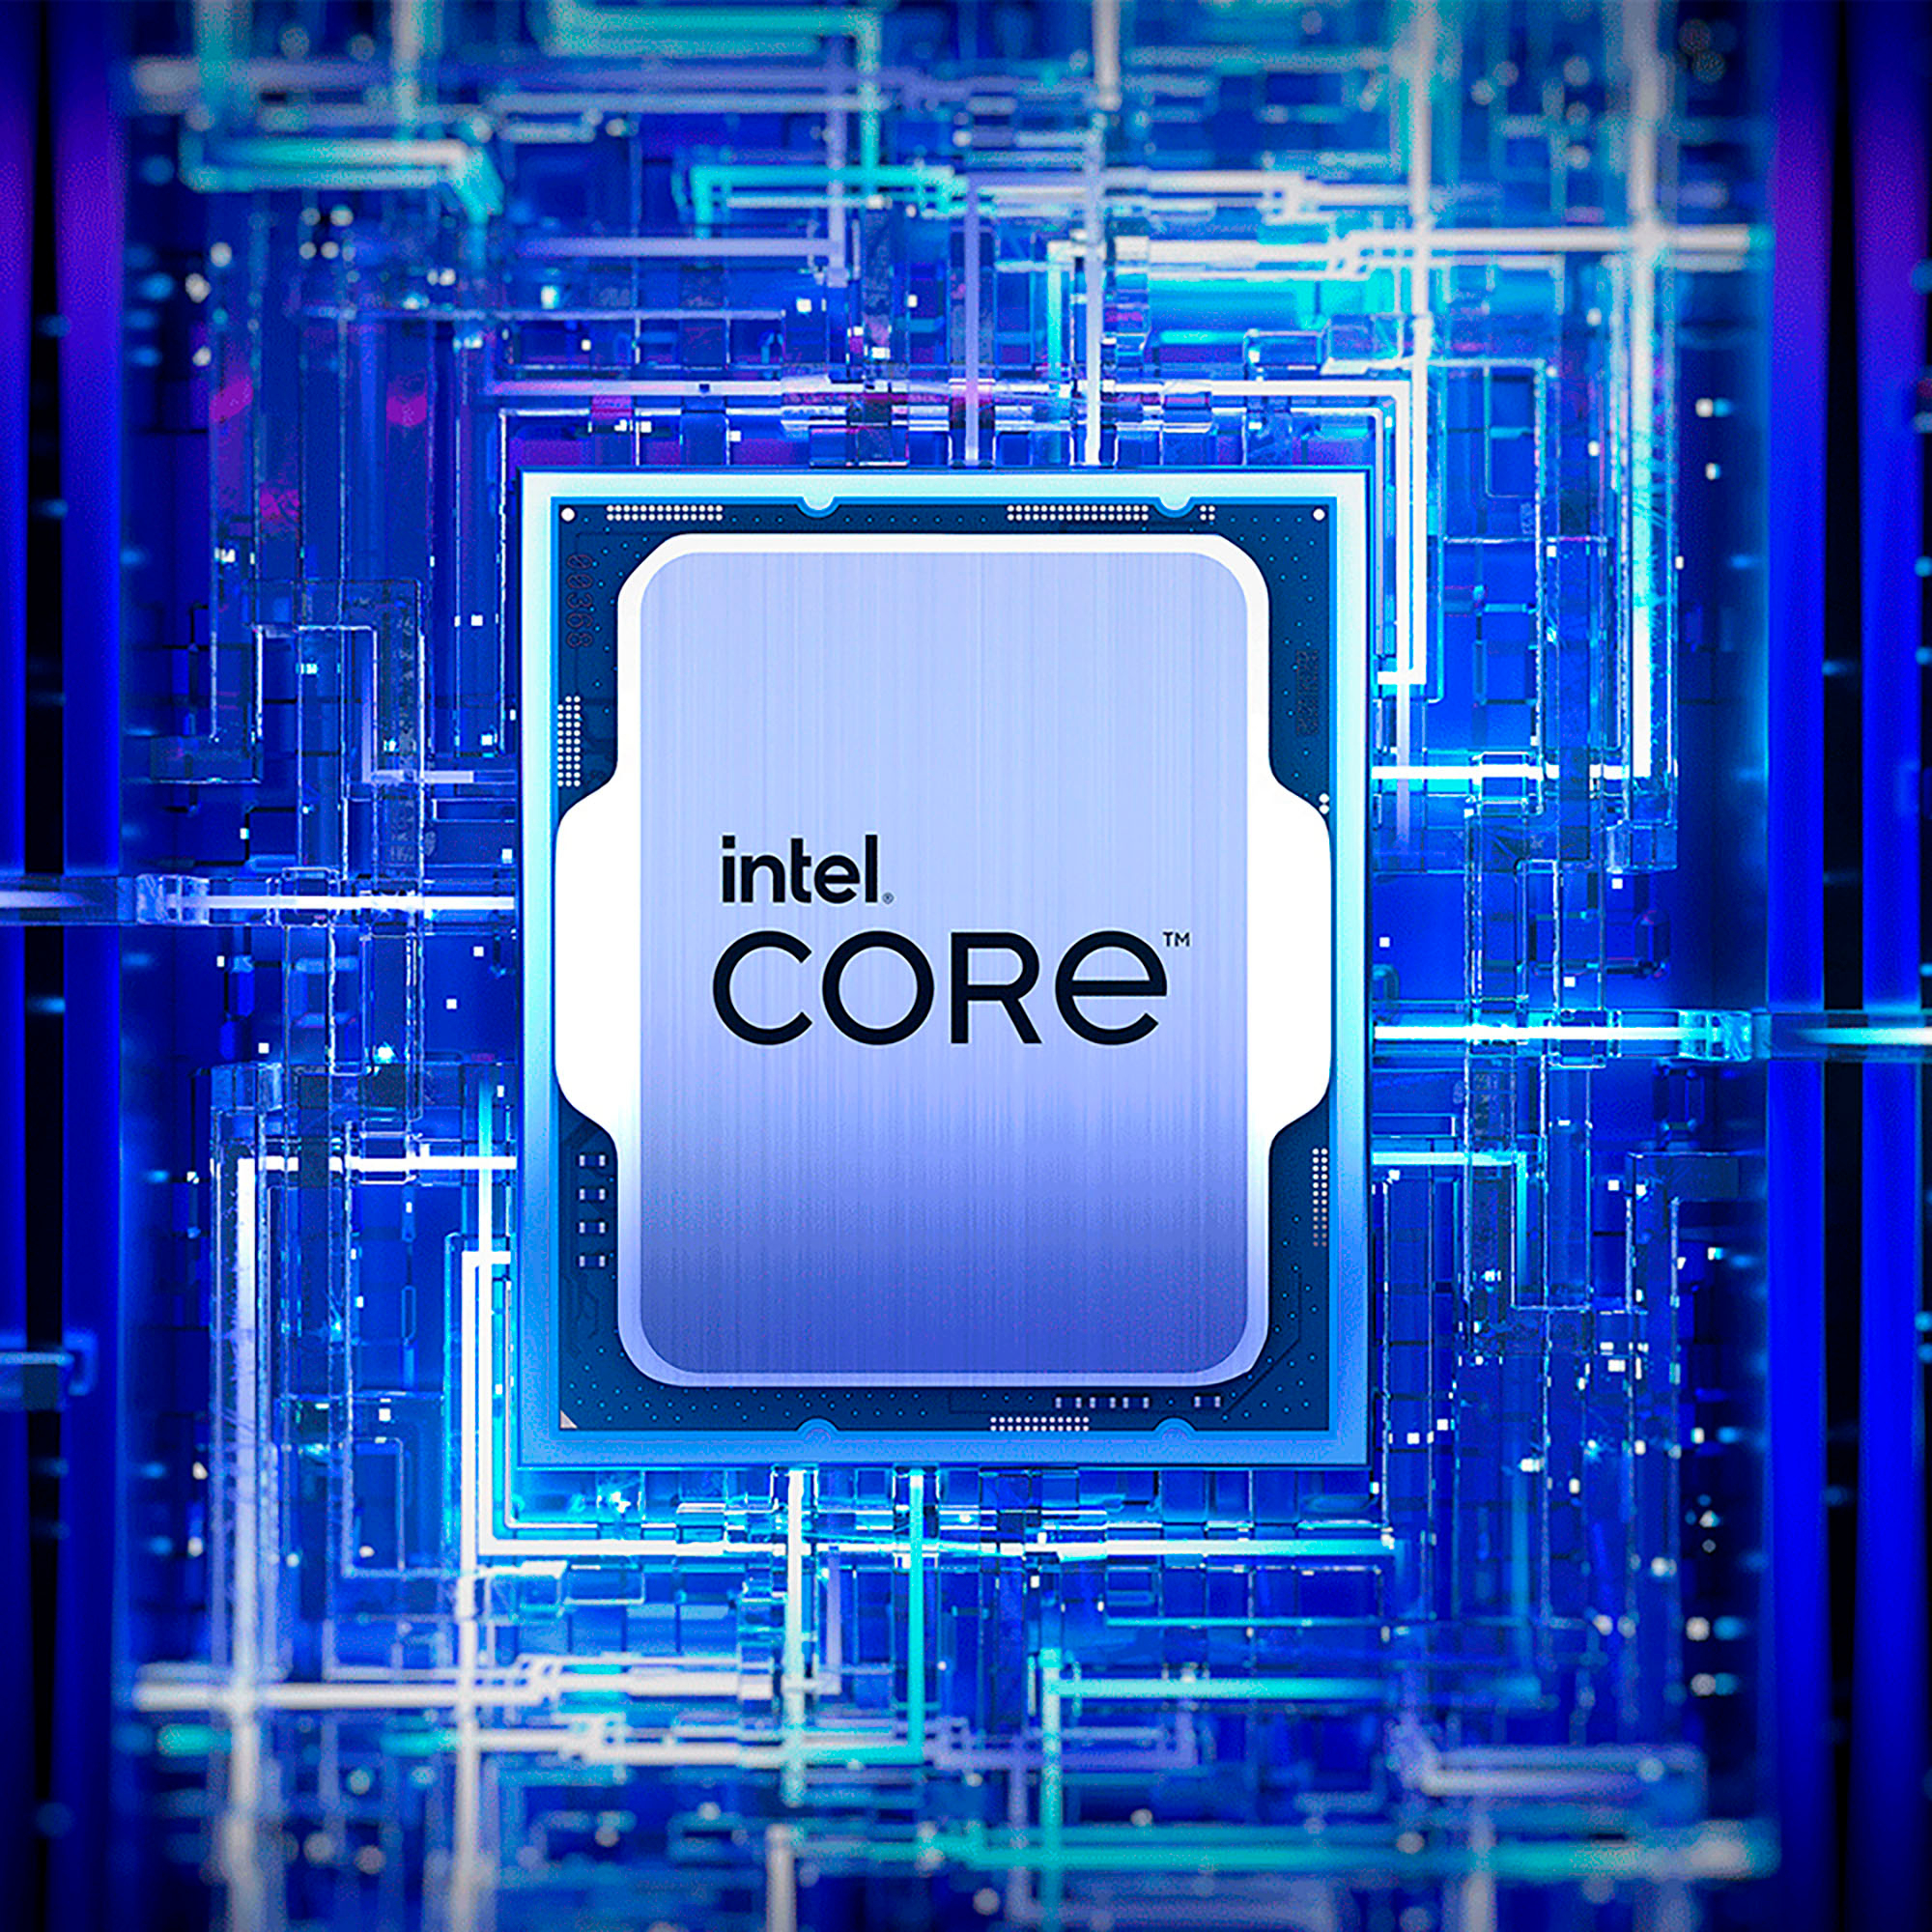 Intel Core i5-13400 13th Gen 10 core 6 P-cores + 4 E-cores, 20MB 